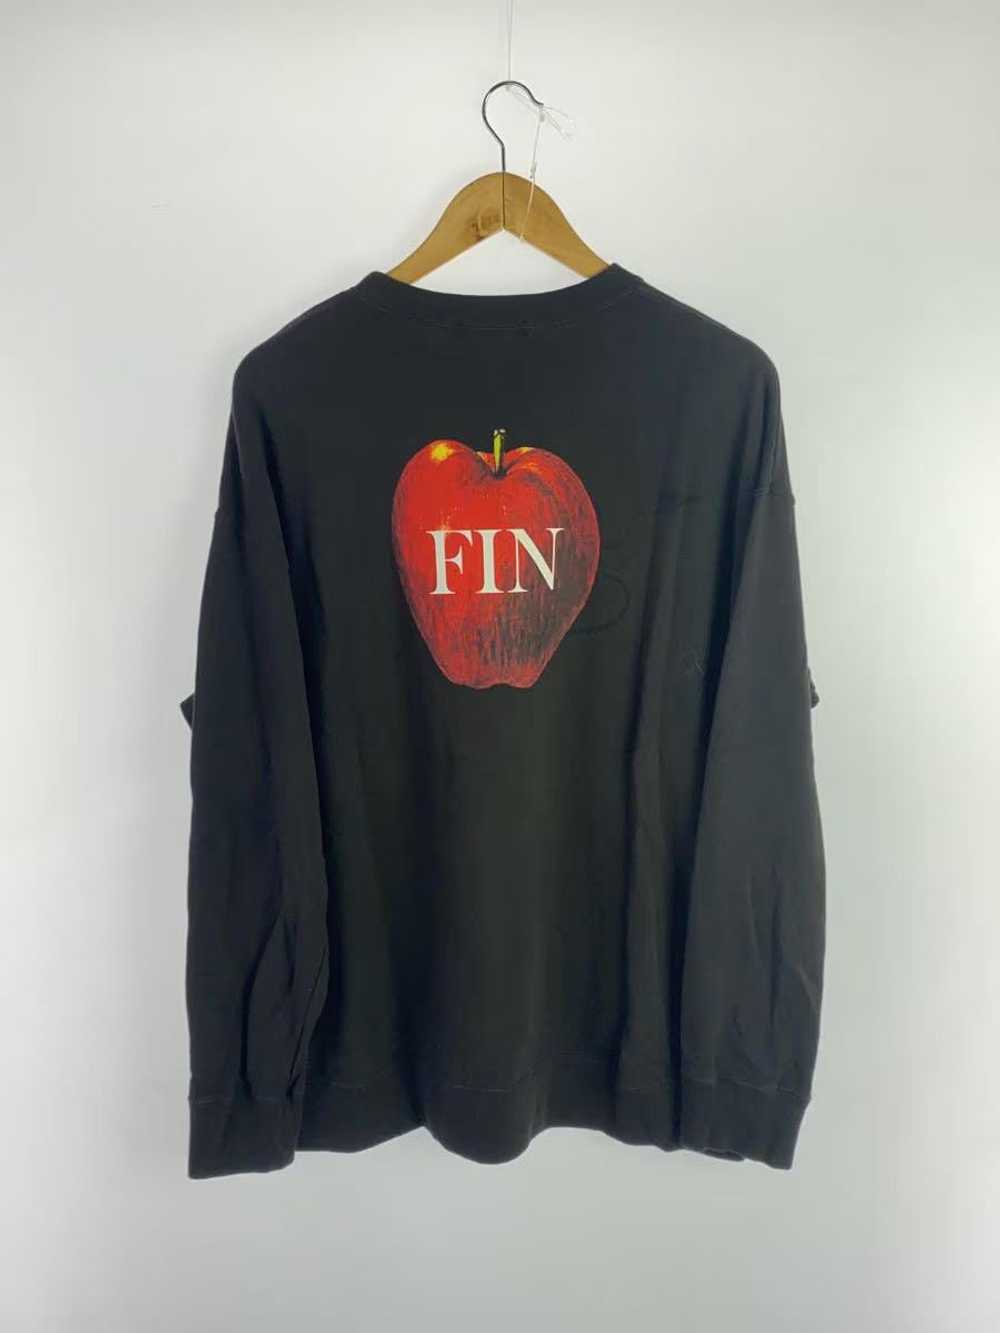 Undercover Oversized "FIN" Apple Sweatshirt - image 2